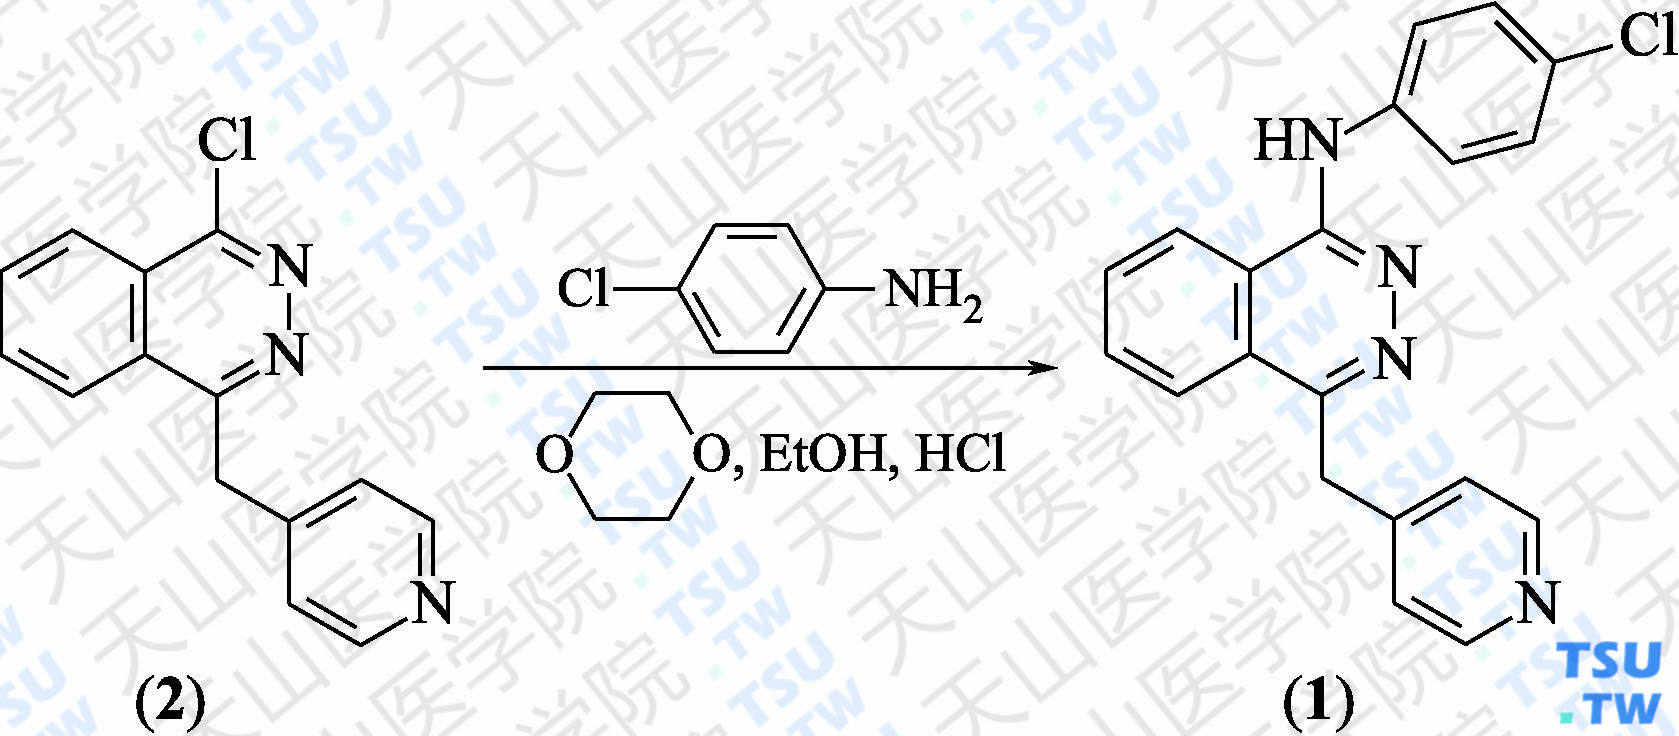 <i>N</i>-（4-氯苯基）-4-（4-吡啶甲基）酞嗪-1-胺（分子式：C<sub>20</sub>H<sub>15</sub>ClN<sub>4</sub>）的合成方法路线及其结构式